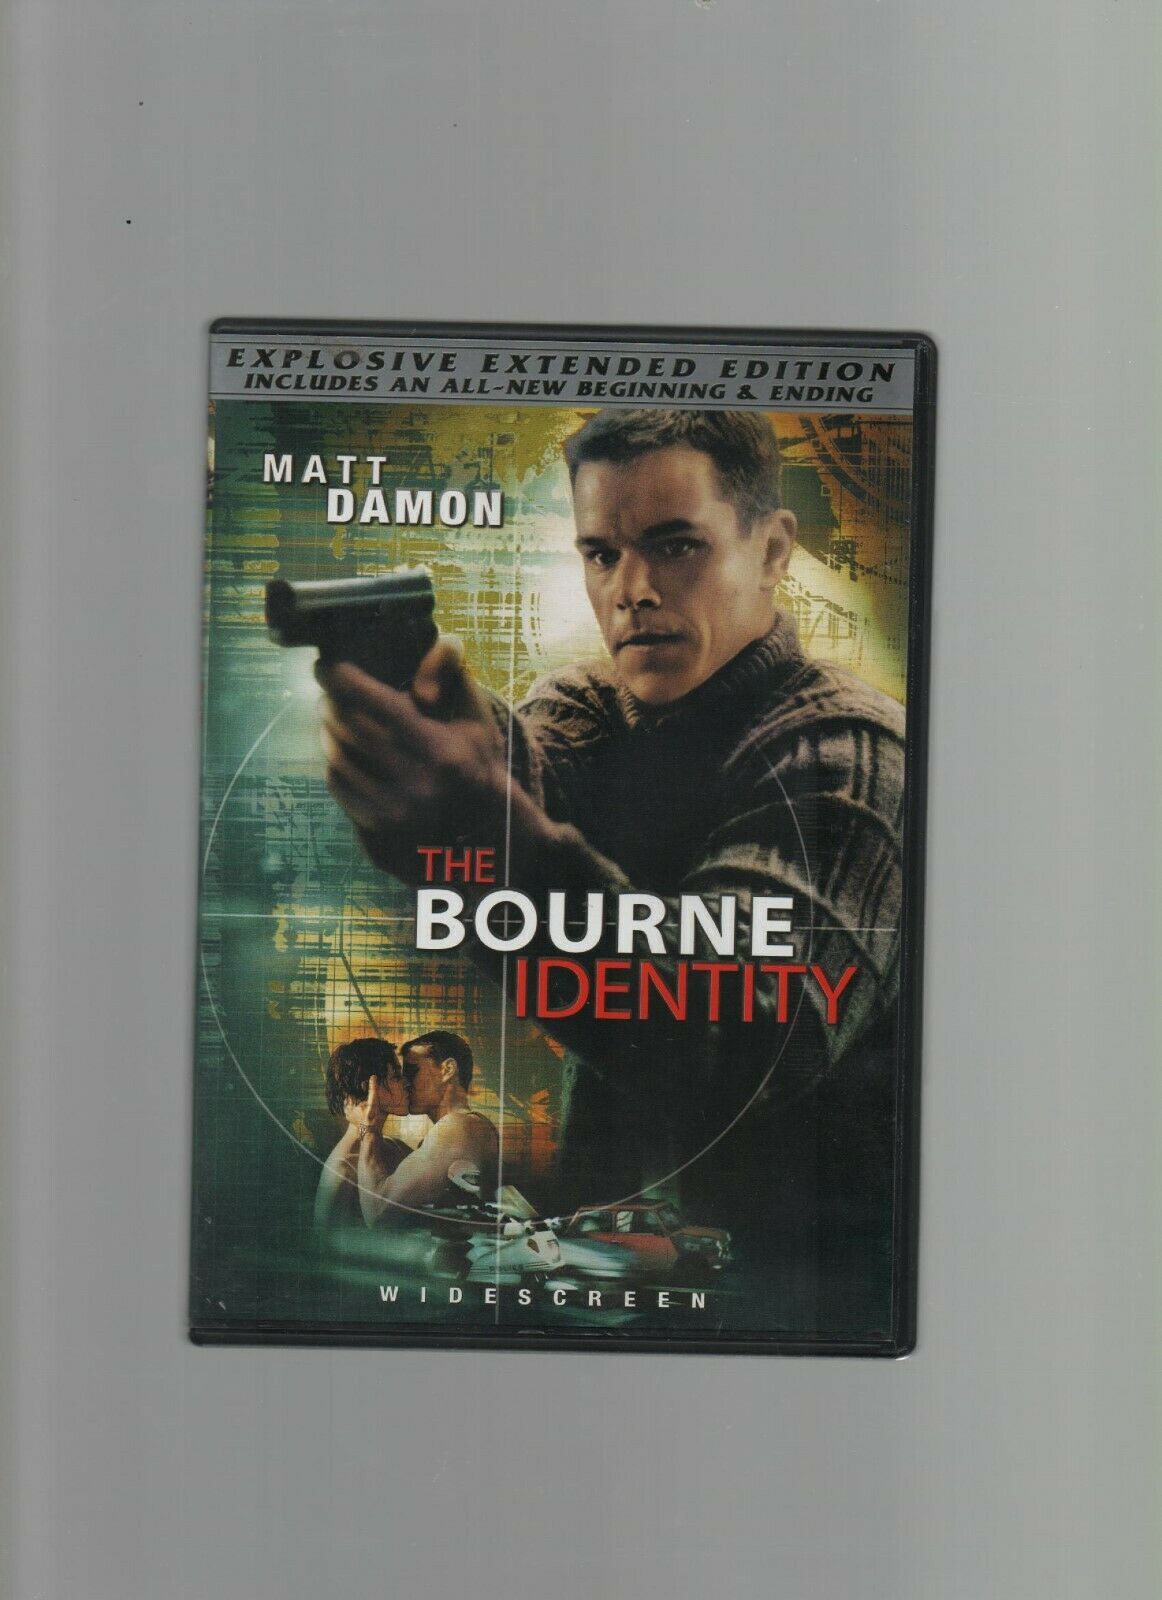 The Bourne Identity - Matt Damon - Extended Edition - DVD 25457 - Universal. - $1.17